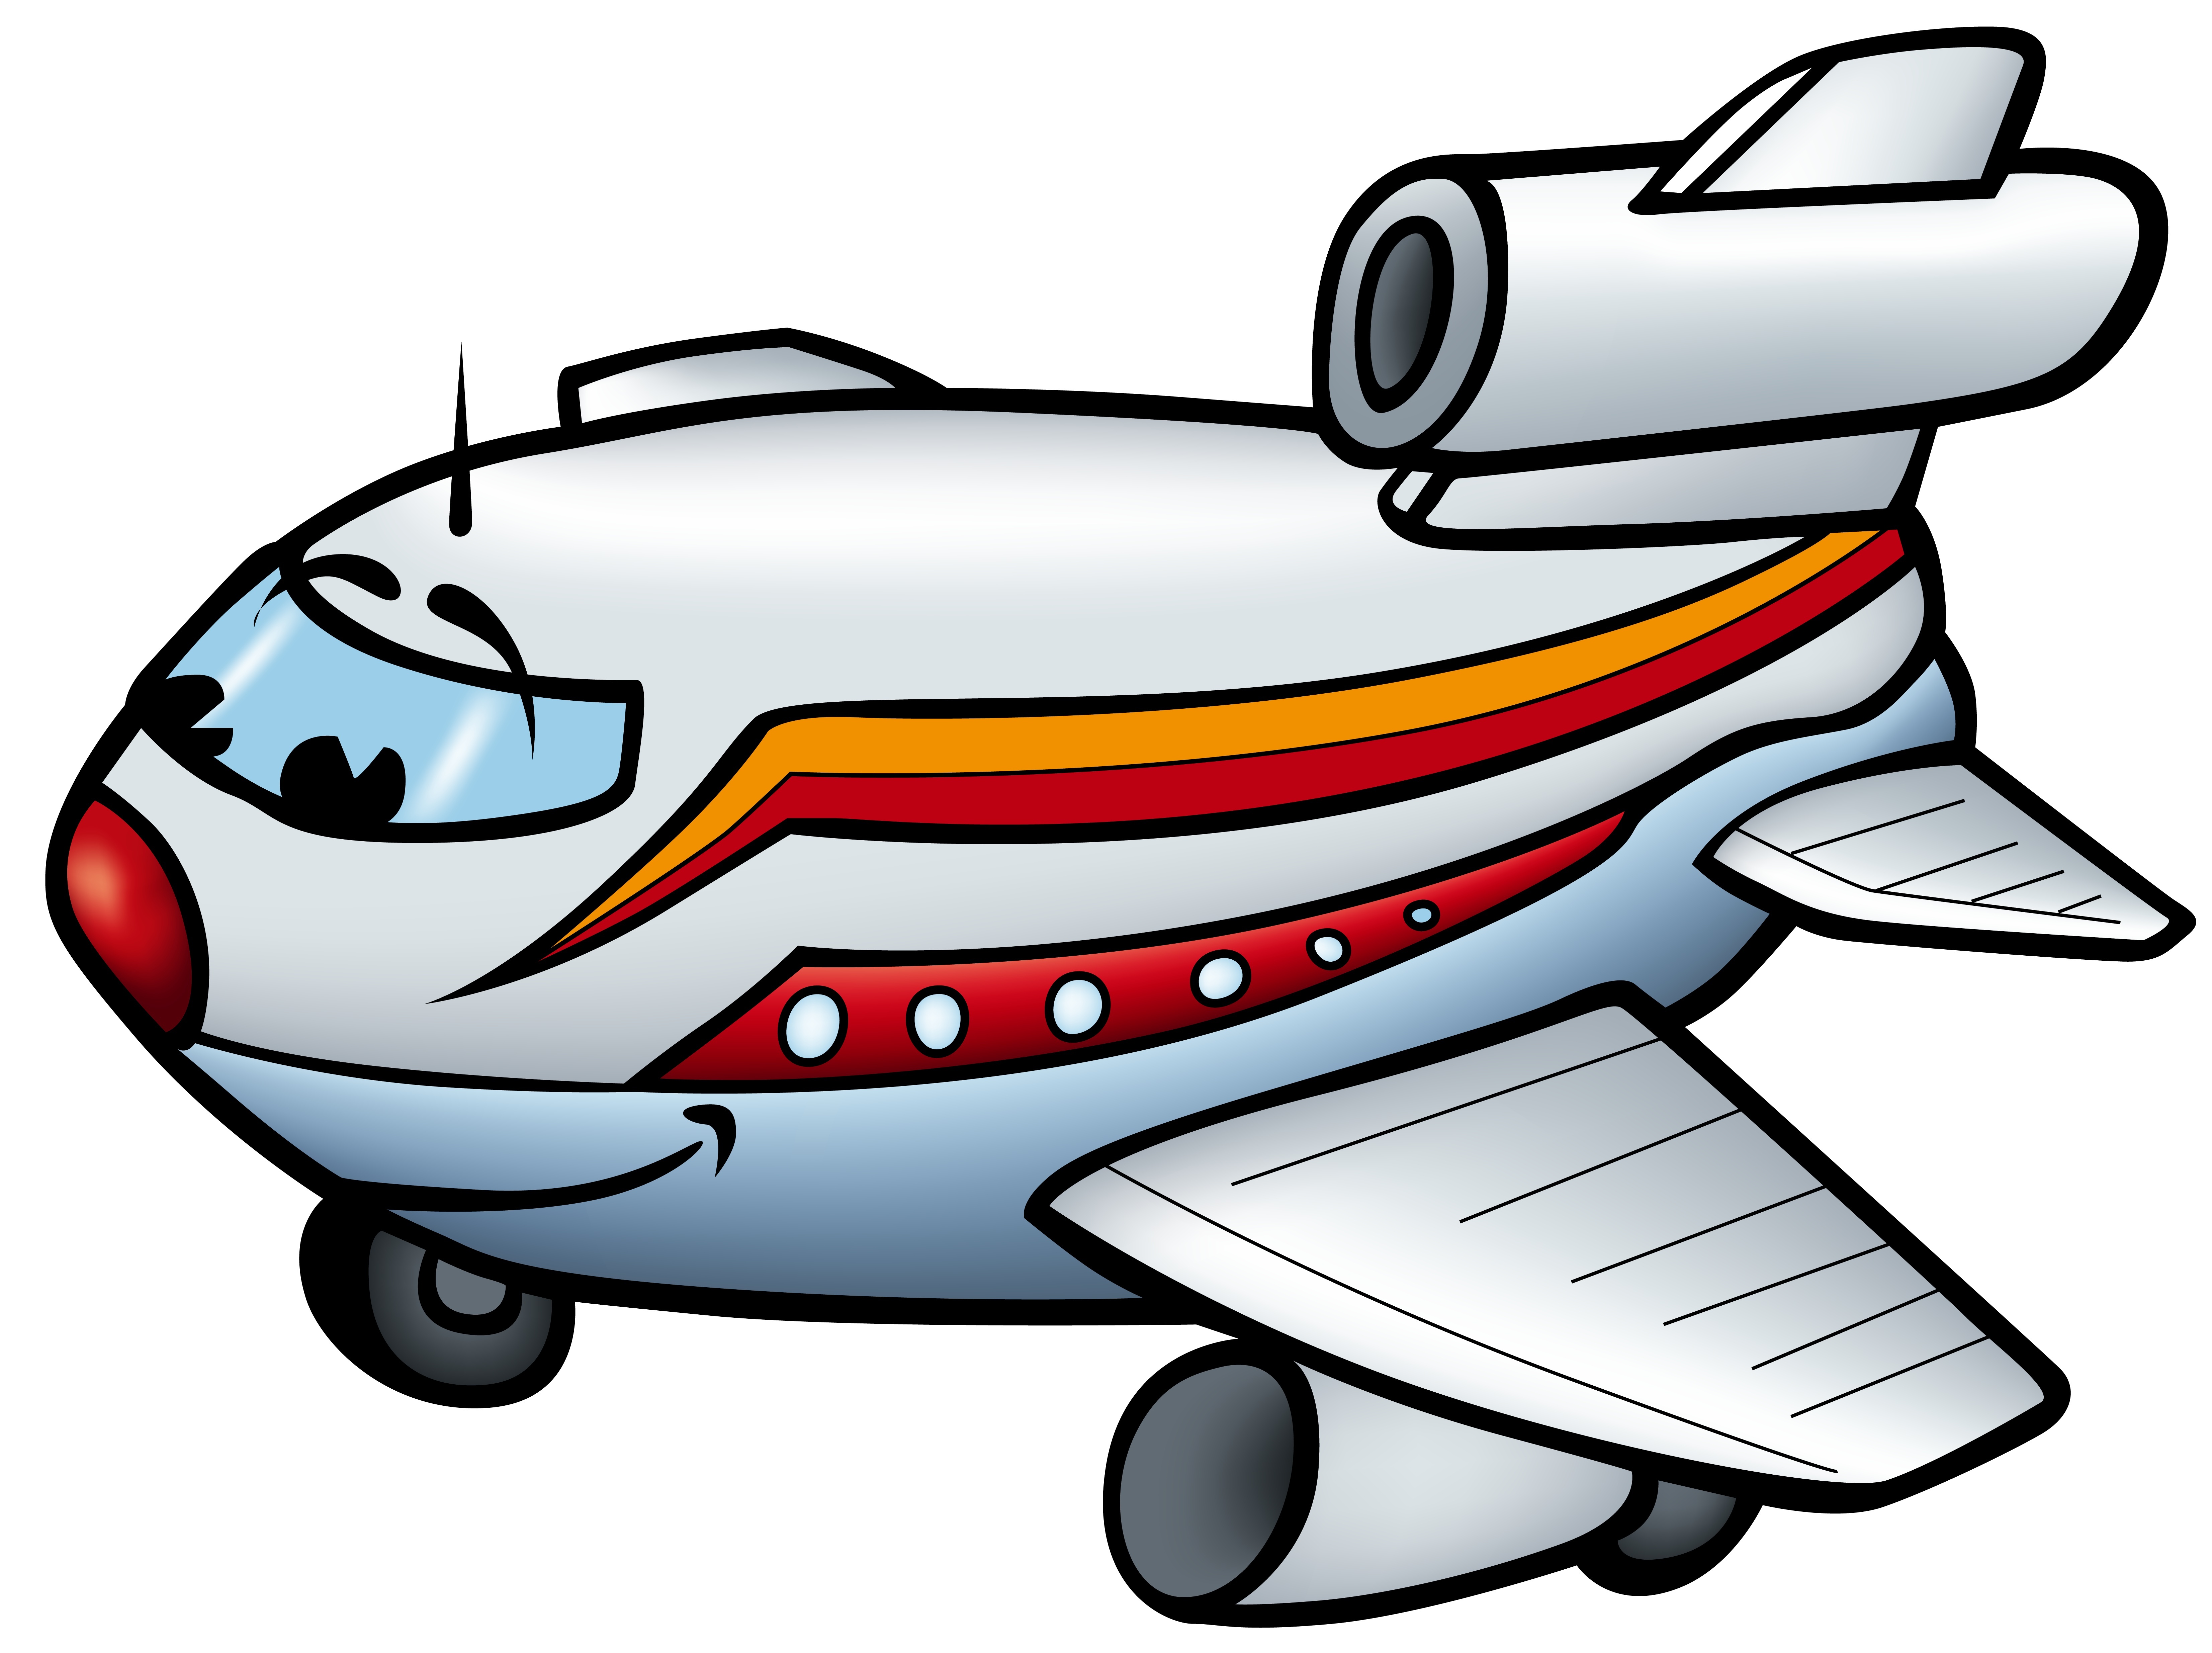 Free Airplane Cartoon Image, Download Free Clip Art, Free.